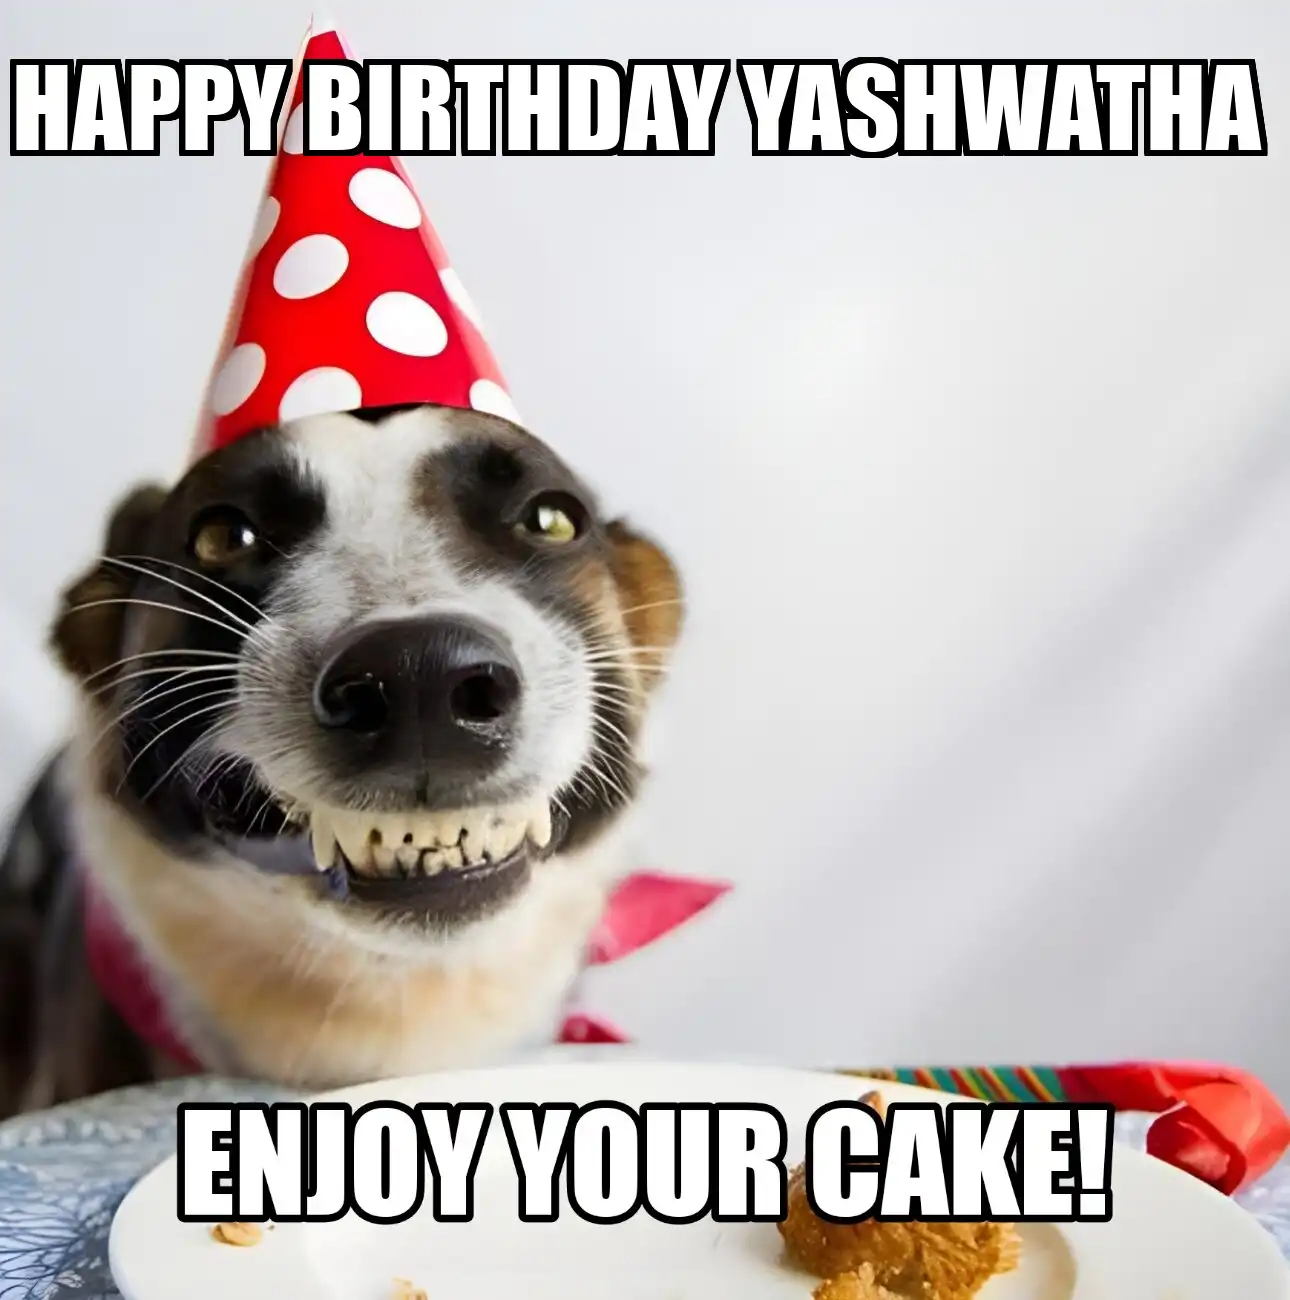 Happy Birthday Yashwatha Enjoy Your Cake Dog Meme